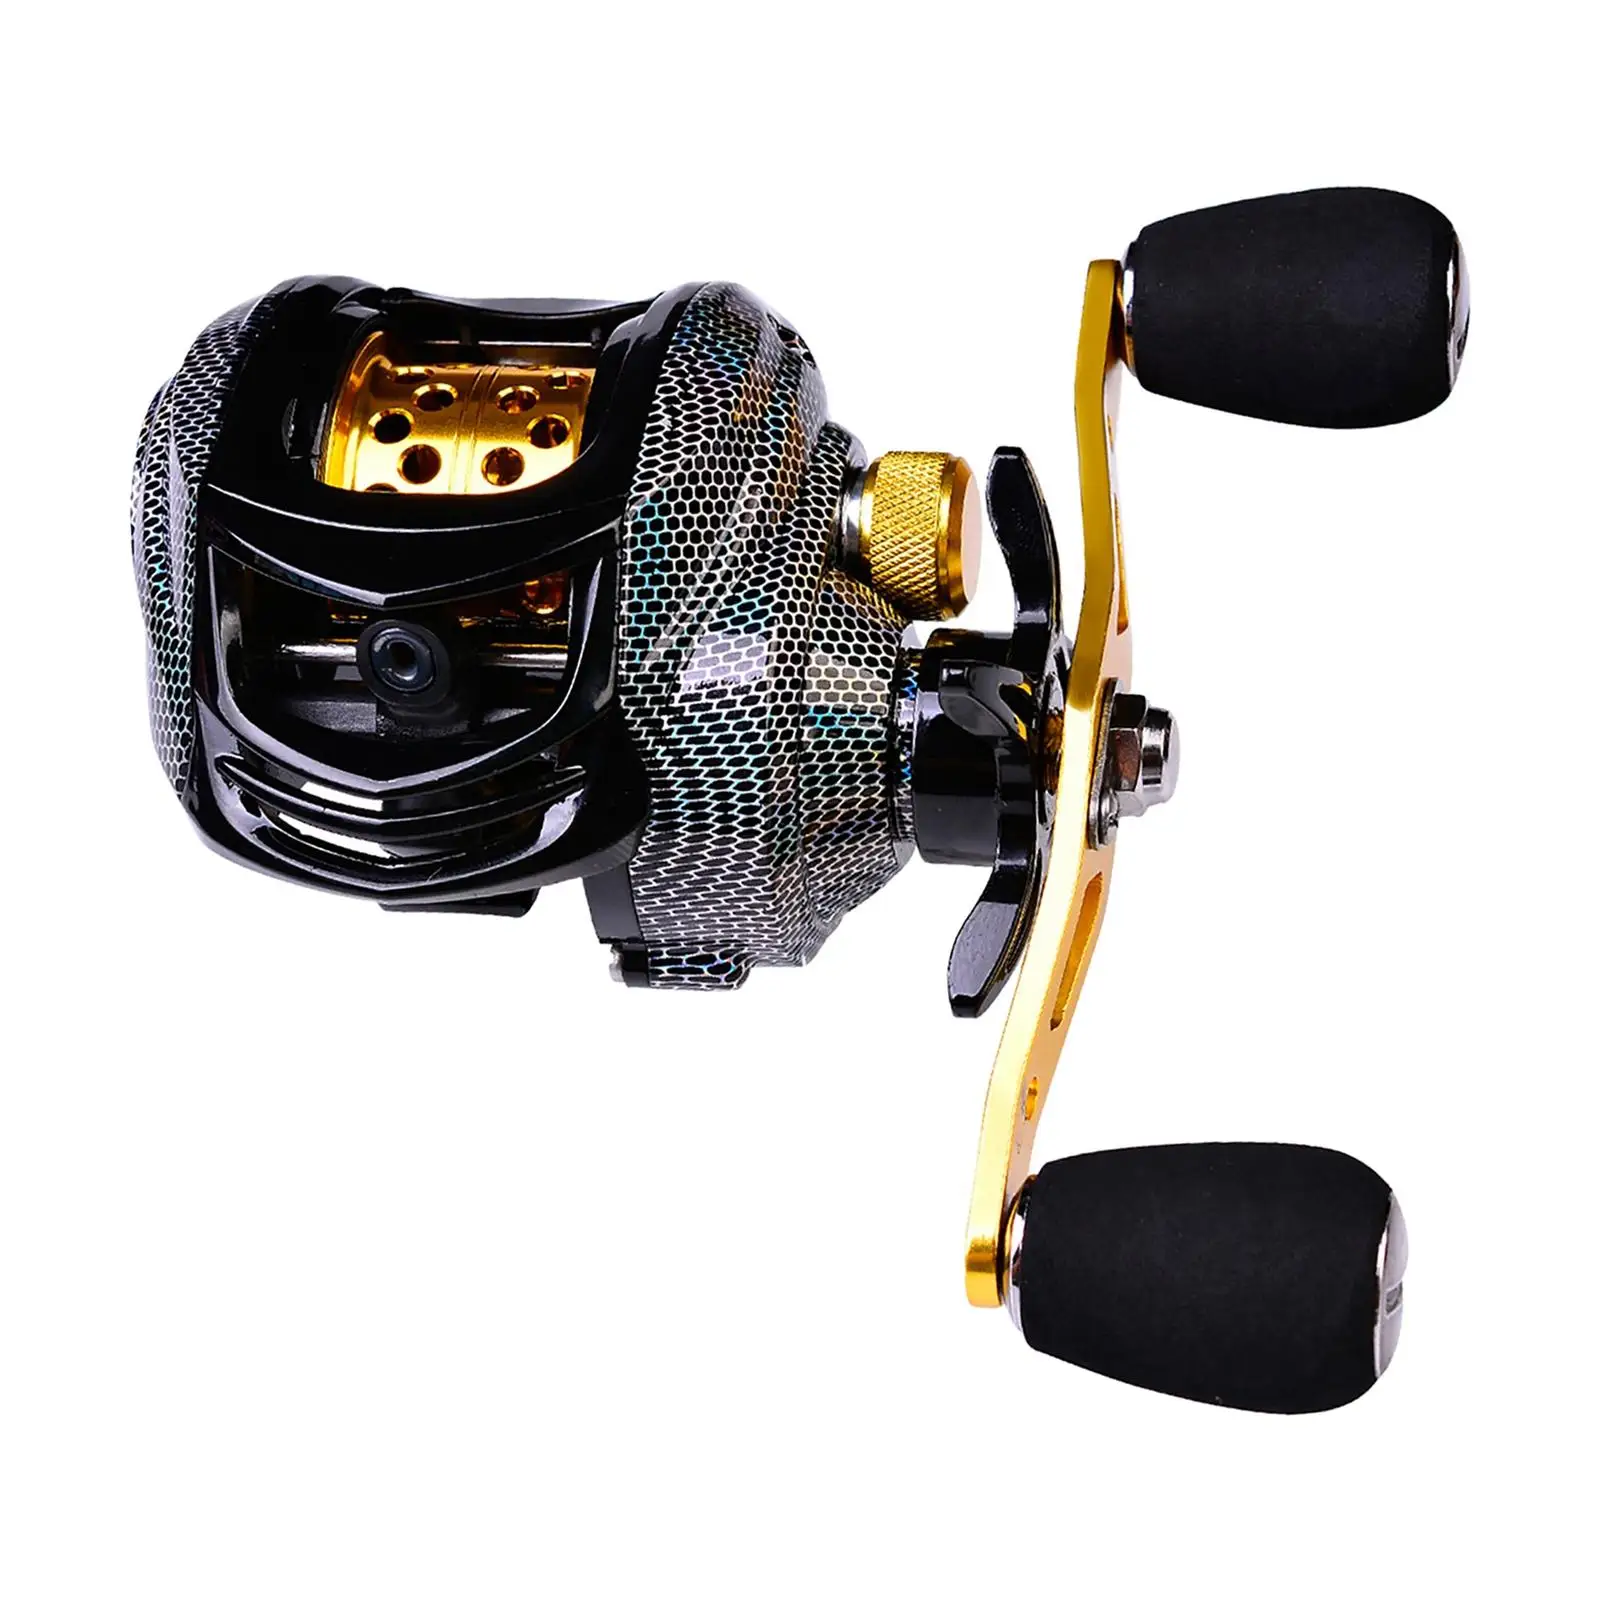 Baitcasting Fishing Reel 18+1 Bearings 7.2:1 Gear Ratio, Lightweight Aluminum Alloy Metal Handle Mechanical Button Star Drag